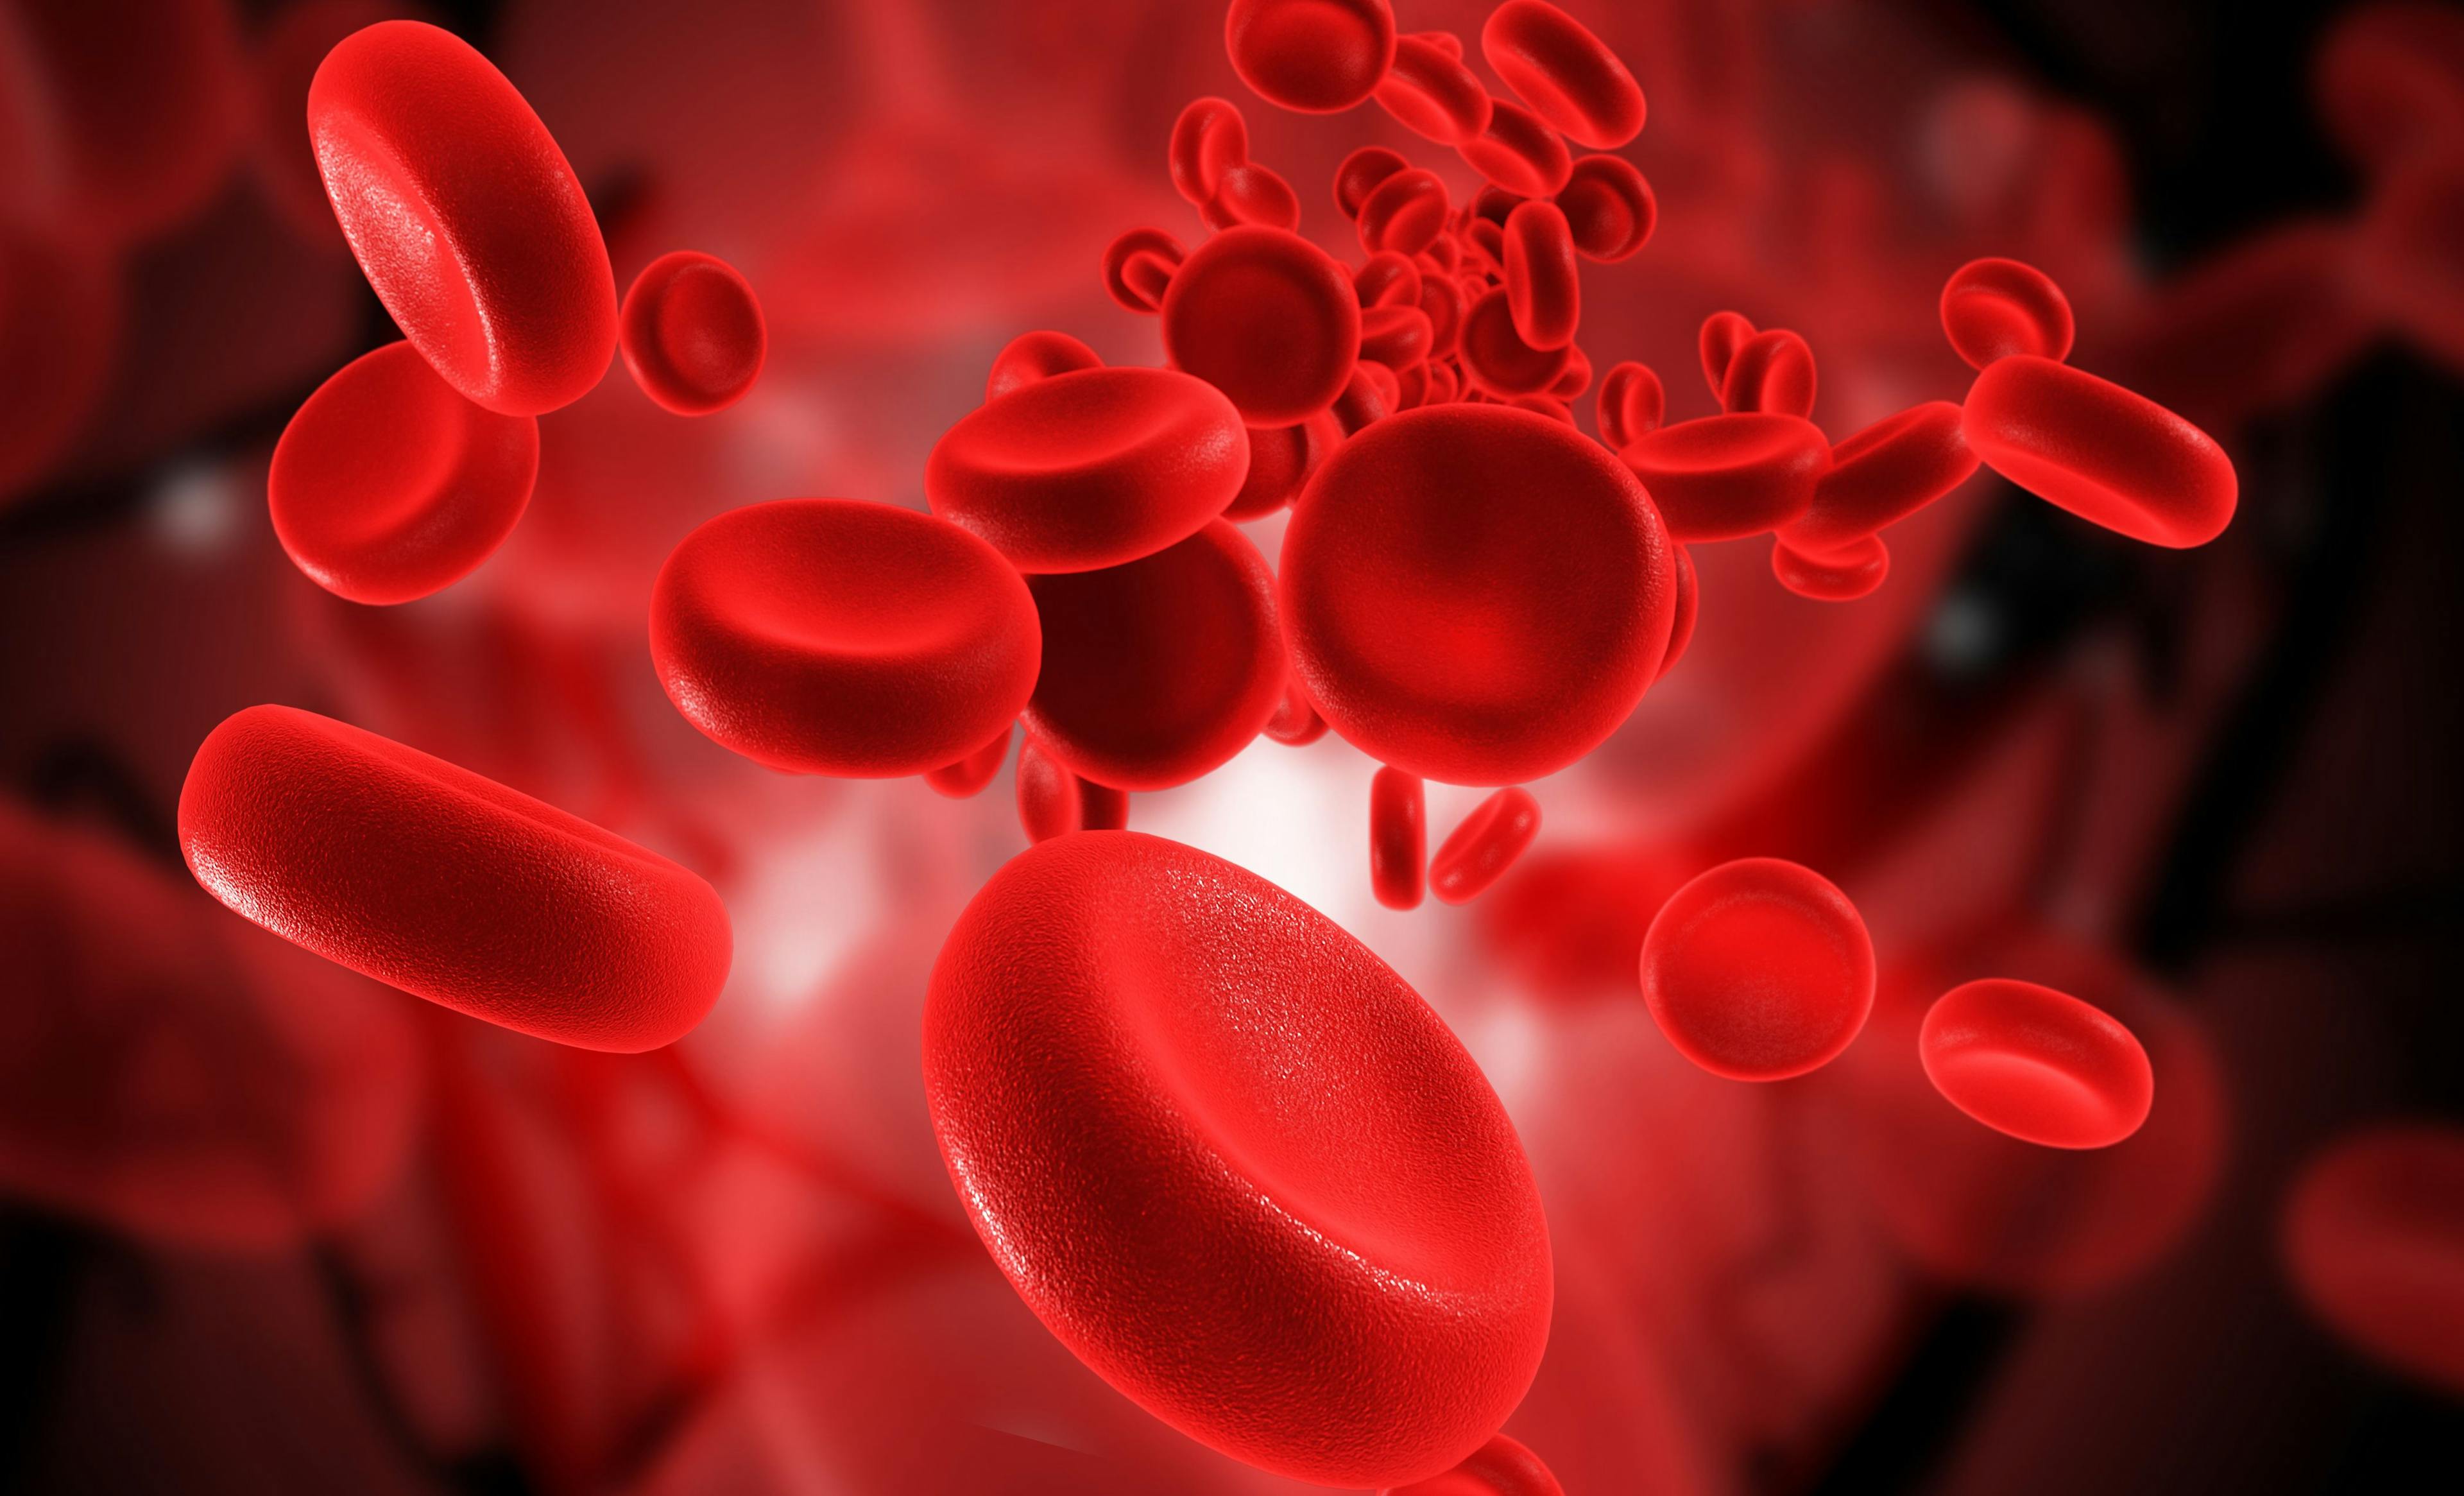 Blood cells: ©abhijith3747 - stock.adobe.com